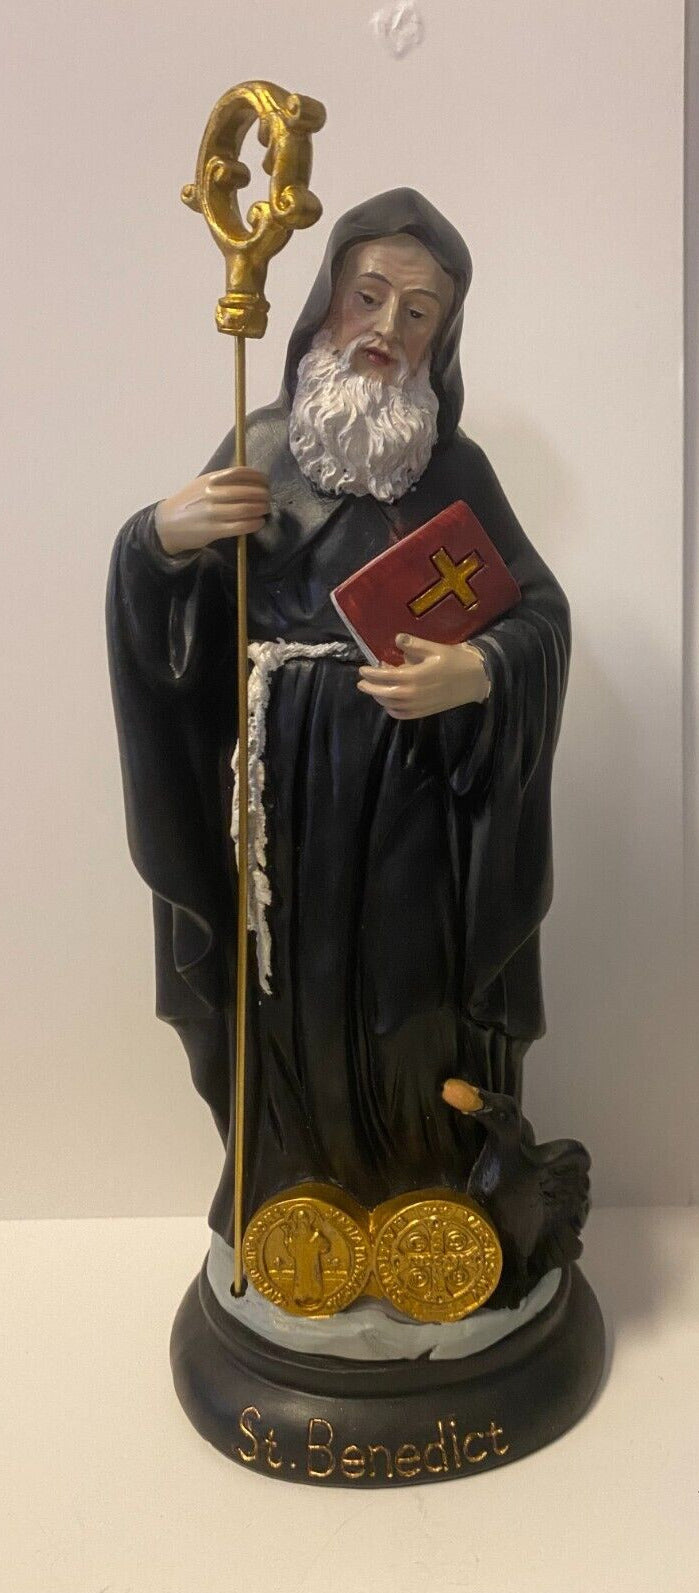 Saint Benedict  12" Statue  New